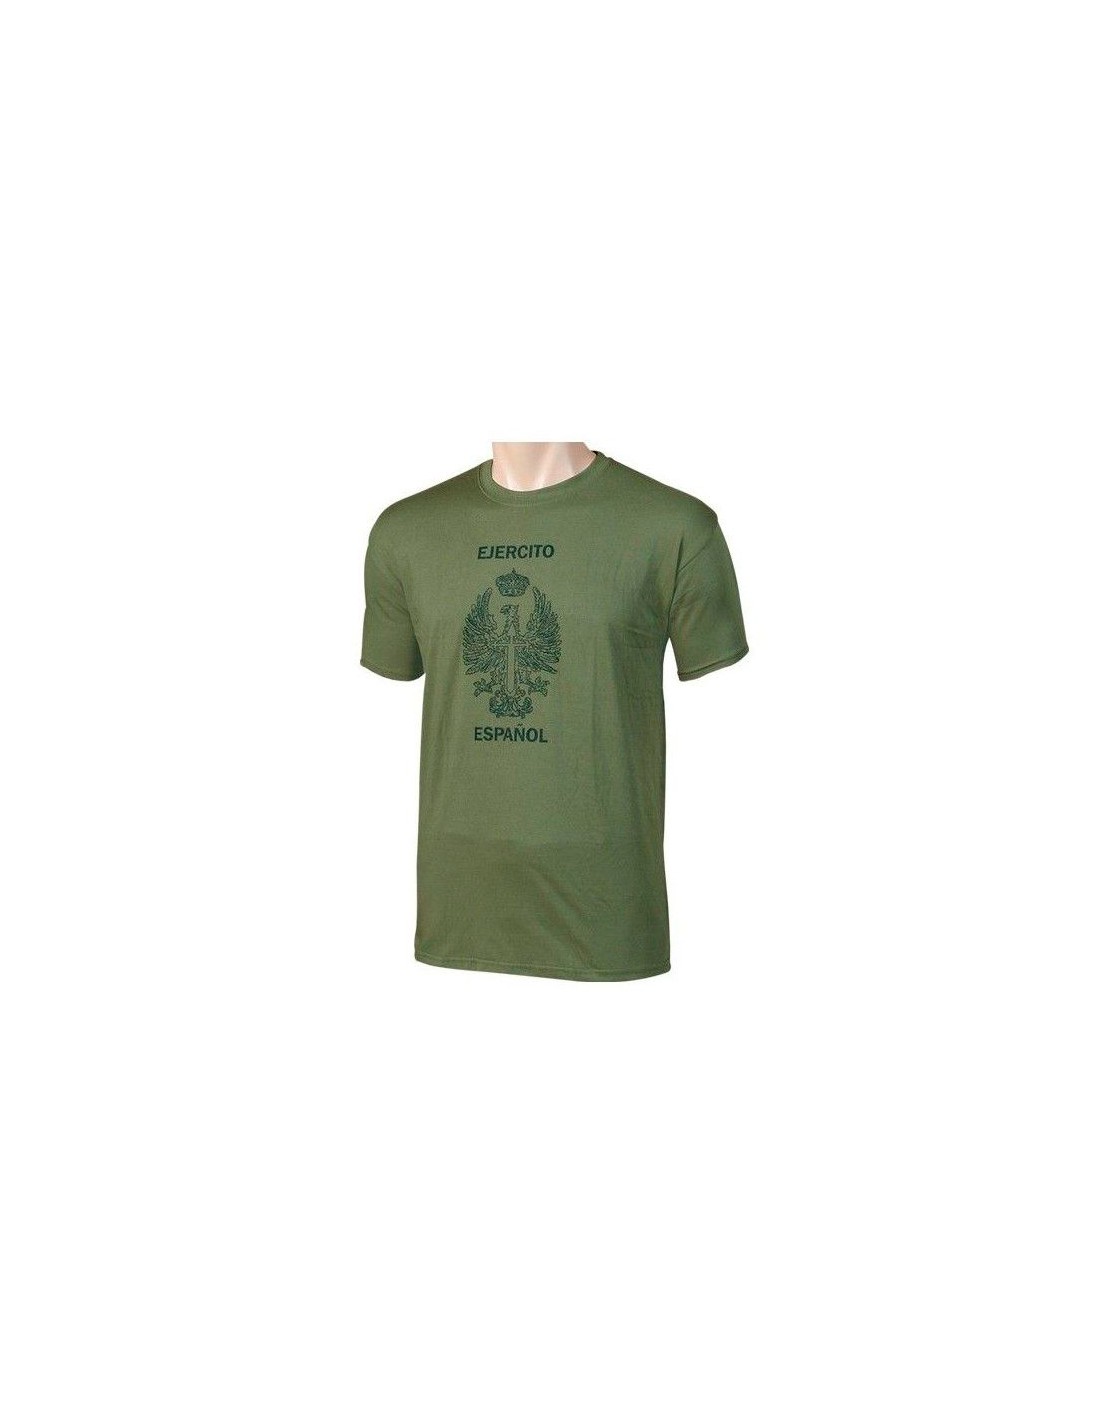 Camiseta militar - Ejército - Regalo' Camiseta hombre